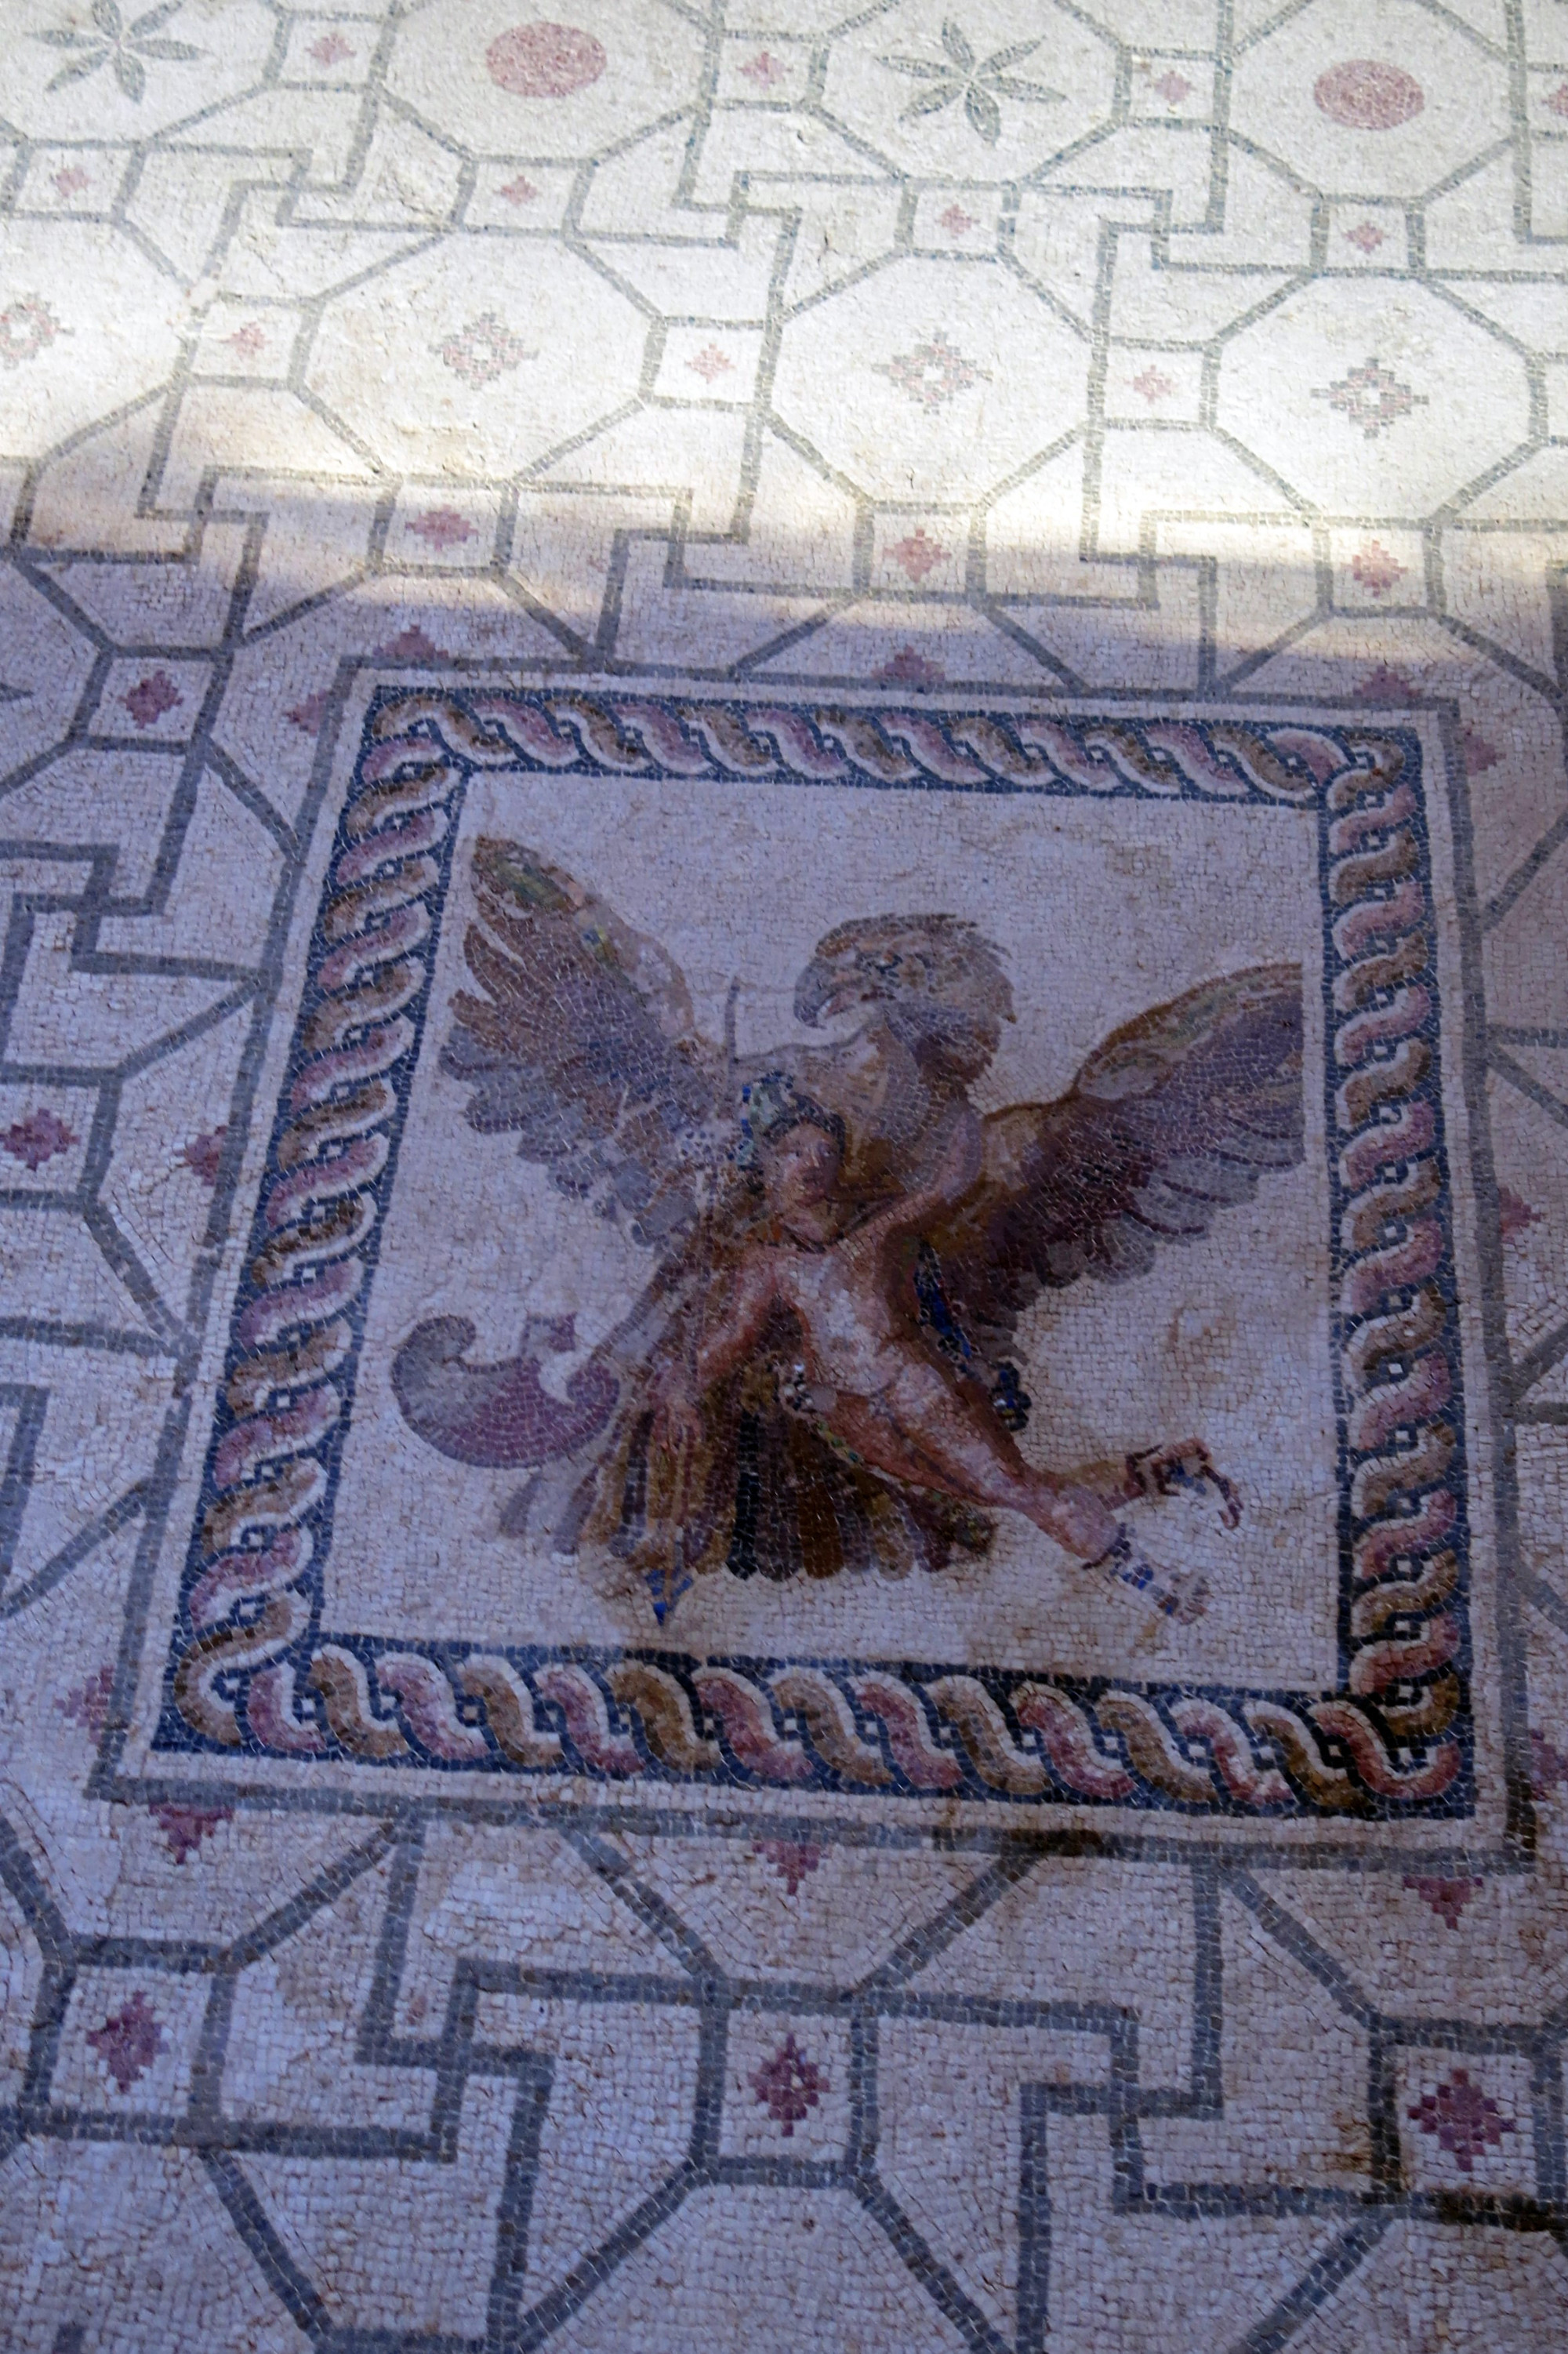 Mosaic depicting the Rape of Ganyme